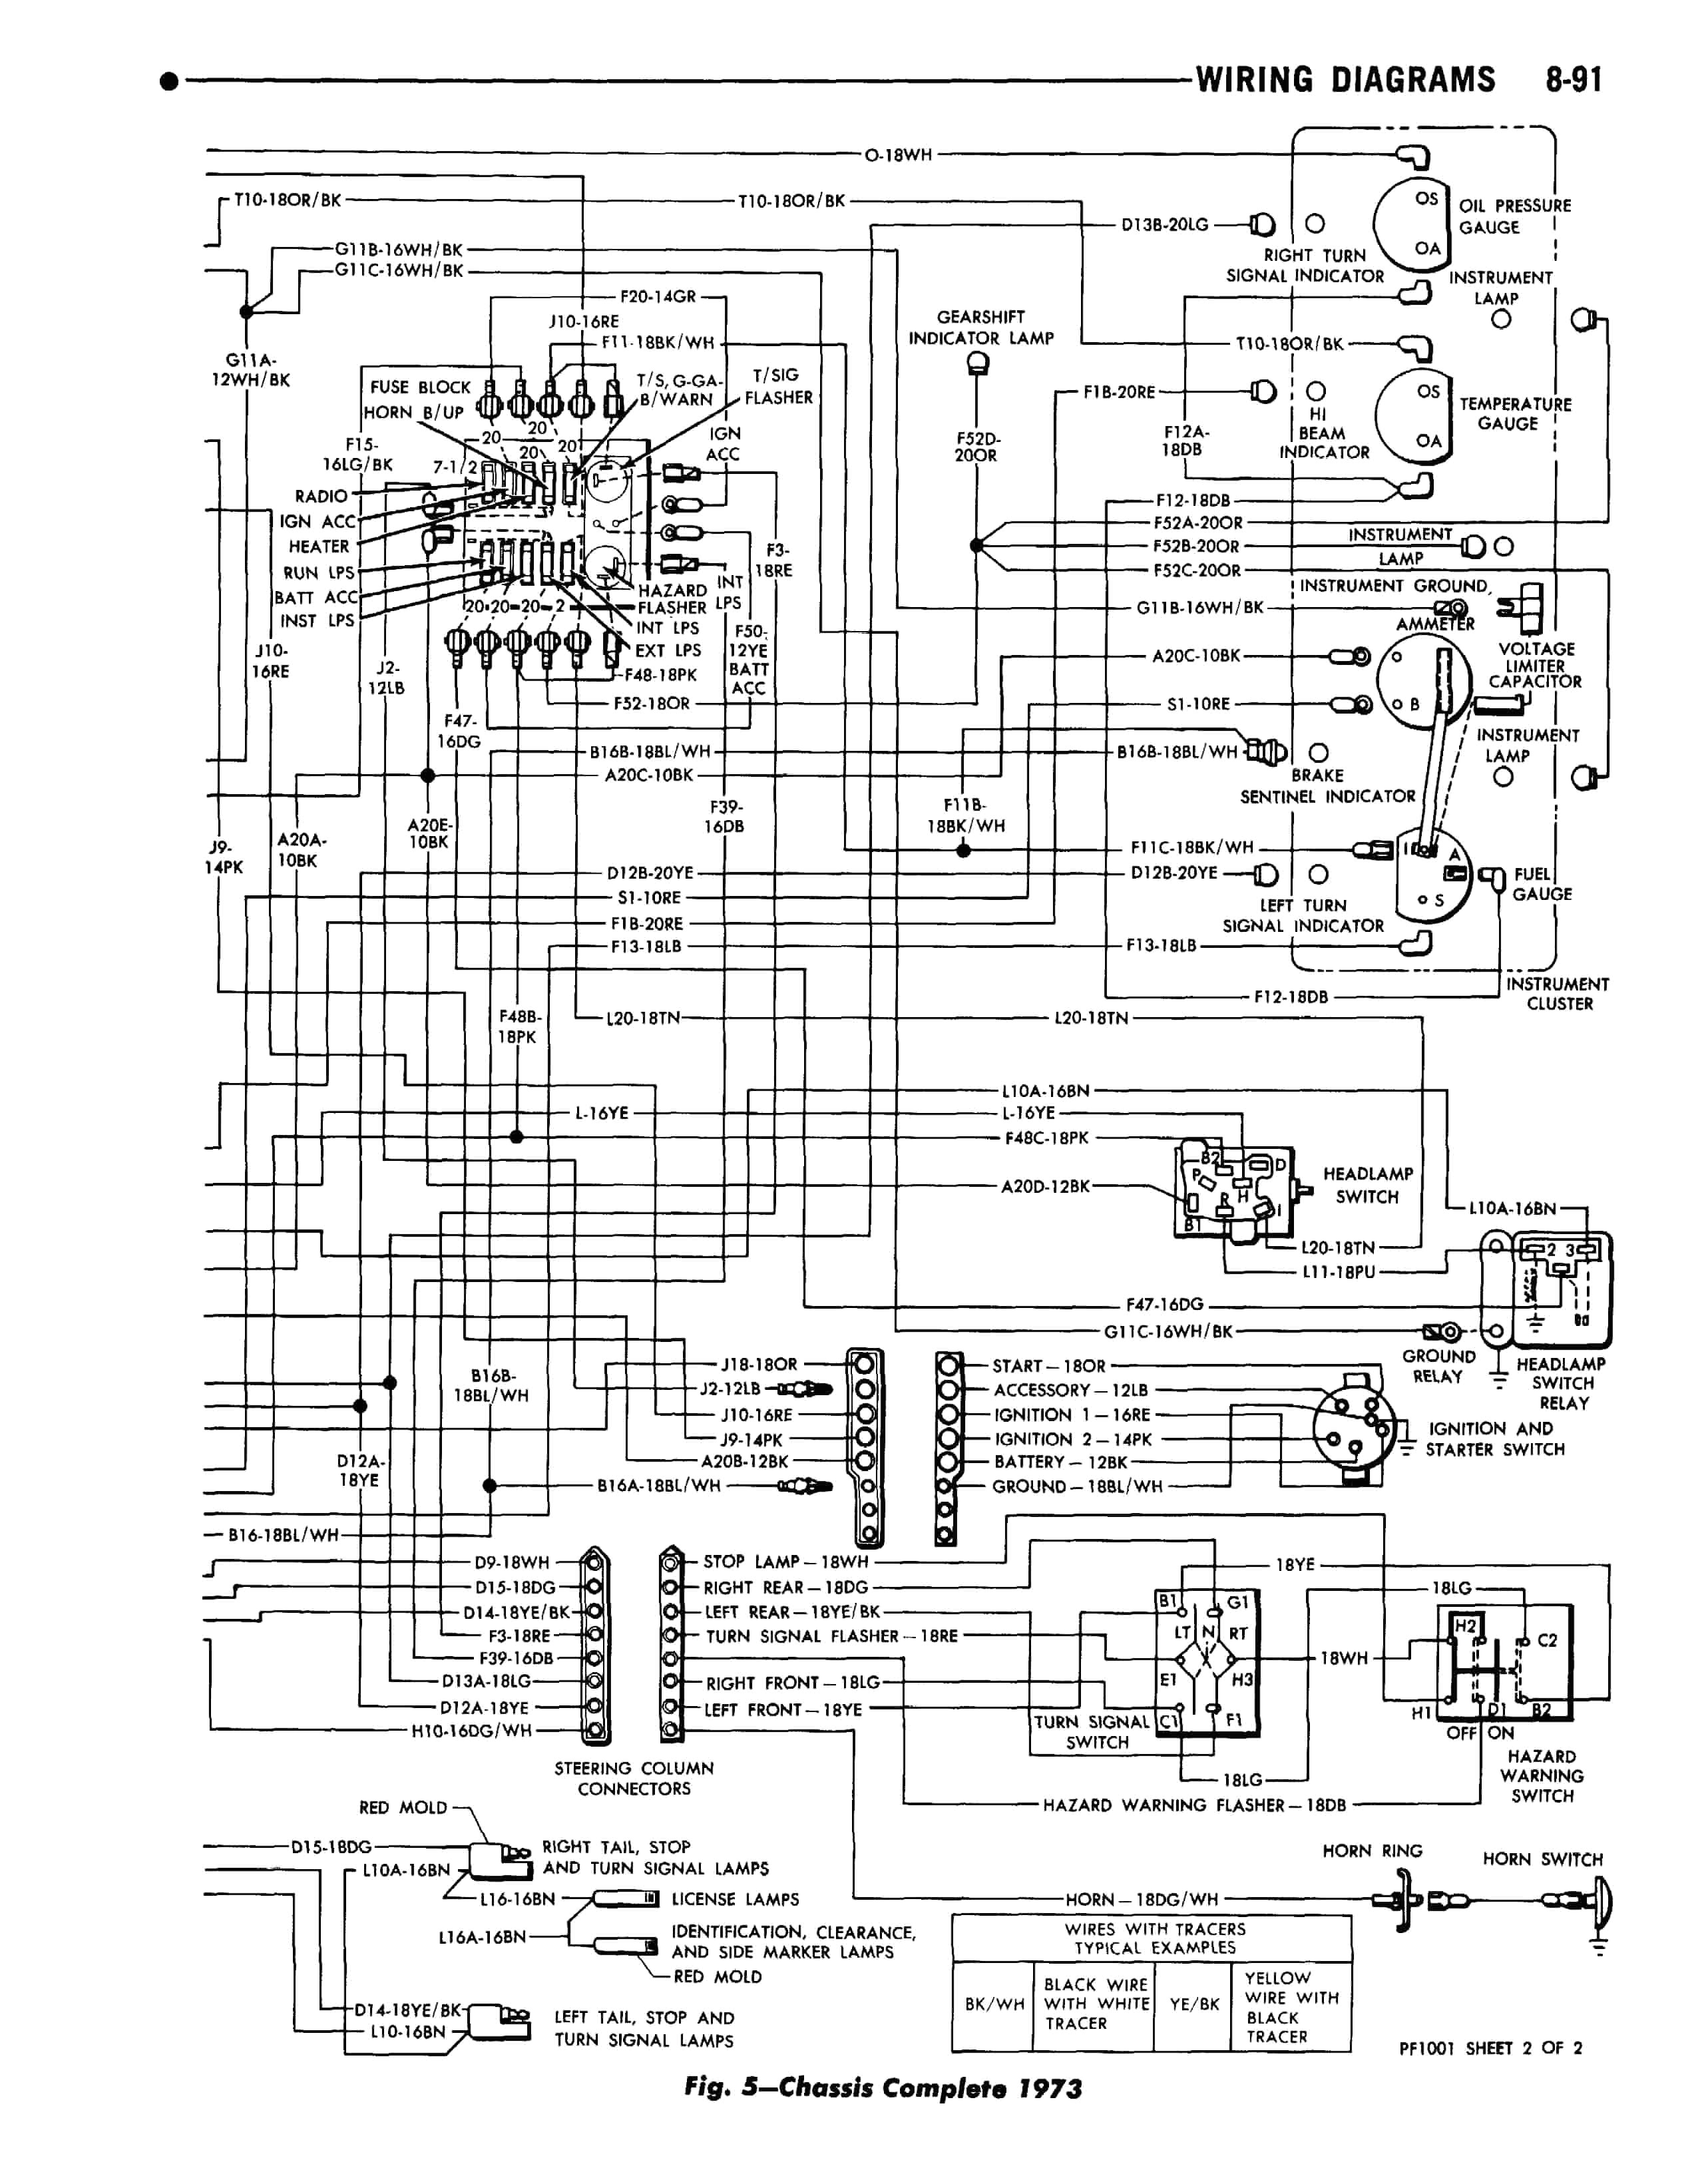 5th wheel rv wiring diagram wiring diagram term 5th wheel rv wiring diagram wiring diagram 5th